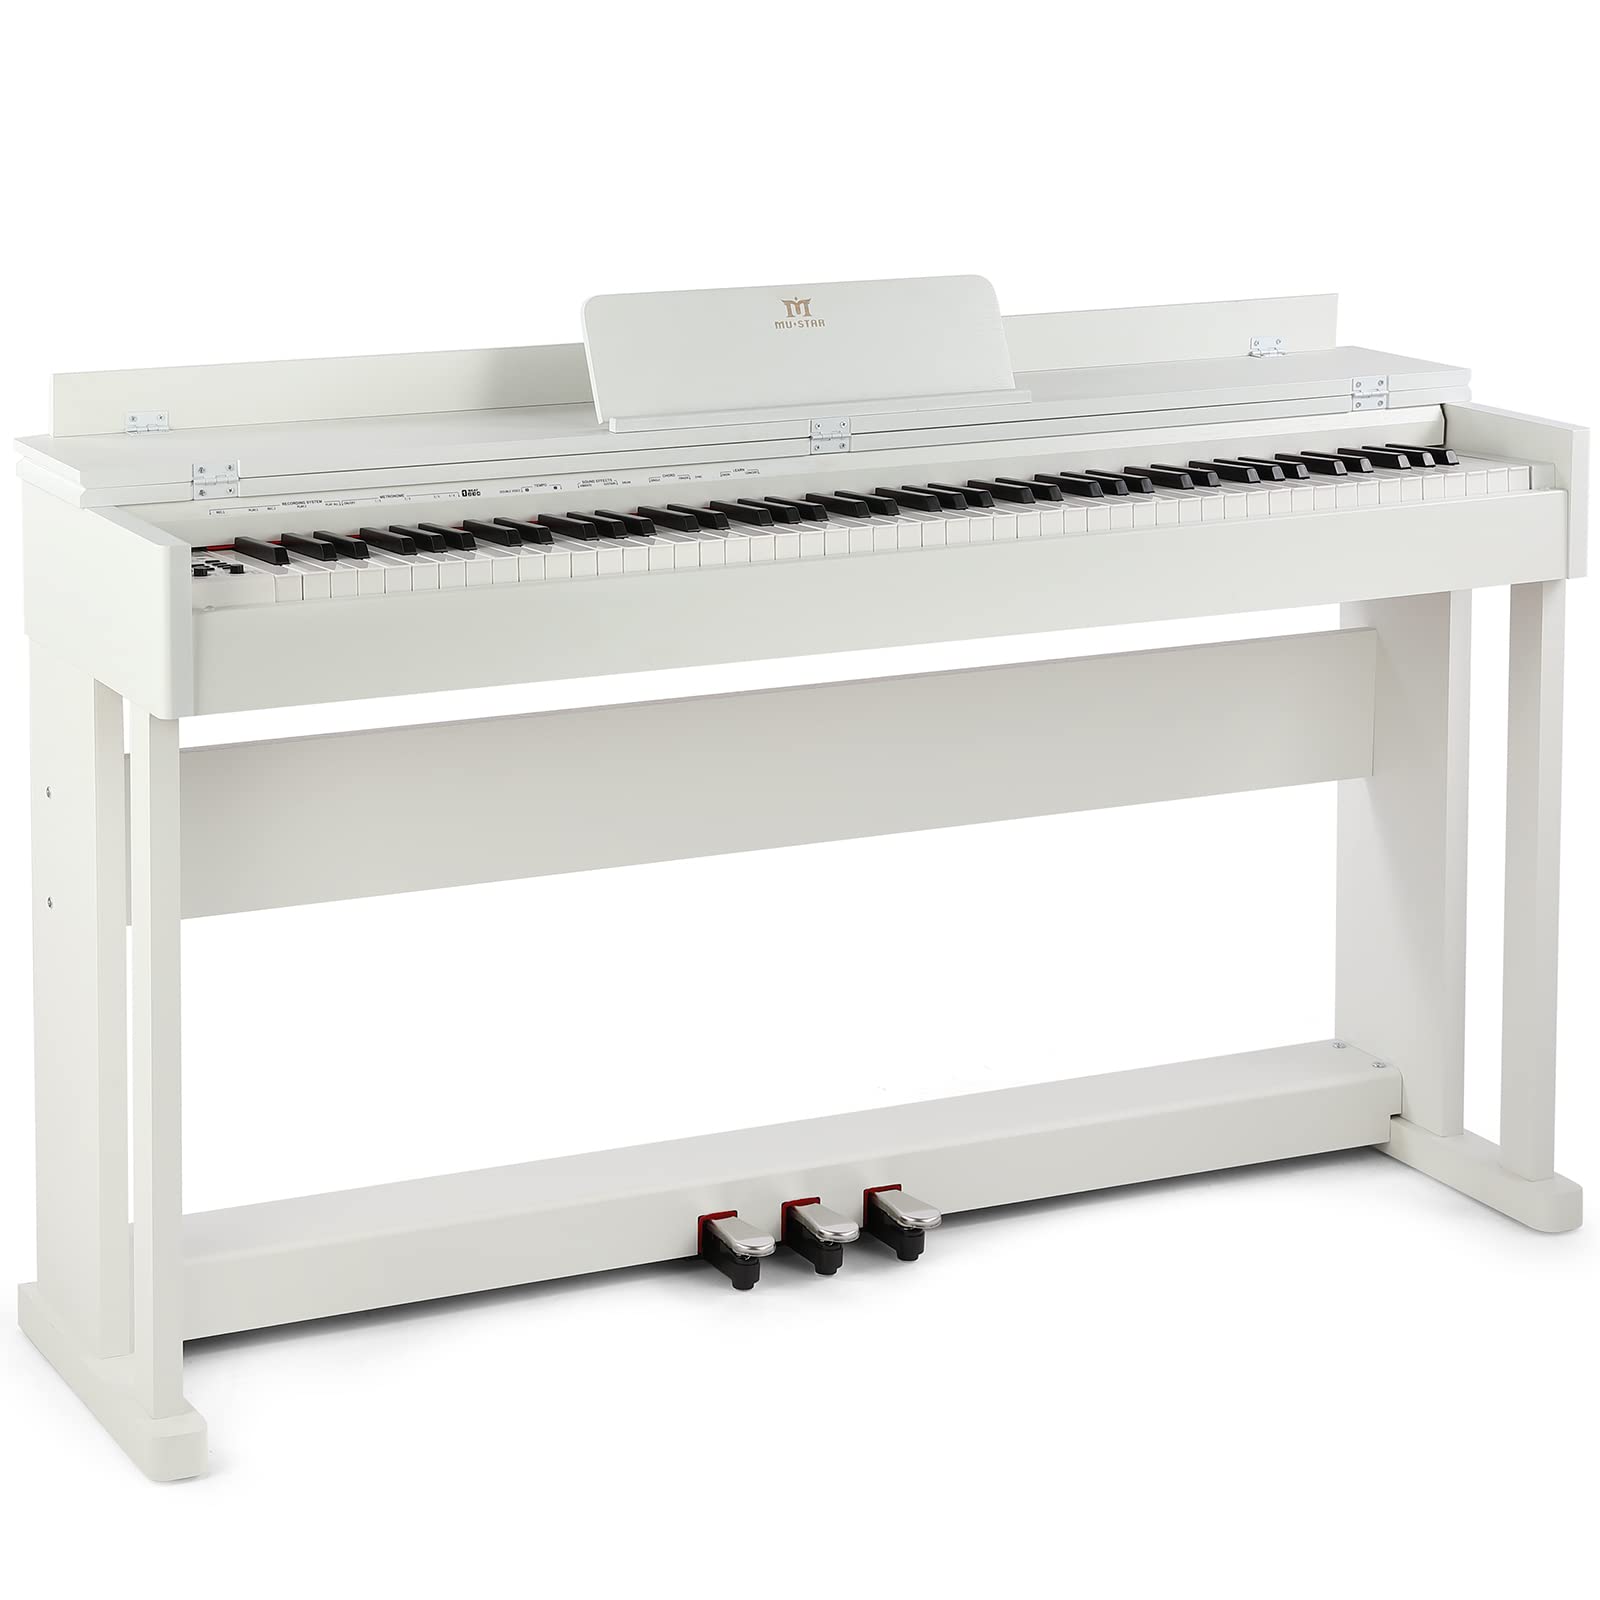 MUSTAR Digital Piano 88 Tasten mit Hammermechanik, E Piano weiß, E-Klavier mit 3 Pedale Adapter, 2 Kopfhöreranschluss, Duales Kontrollsystem, USB/MIDI, Klassisch professionell